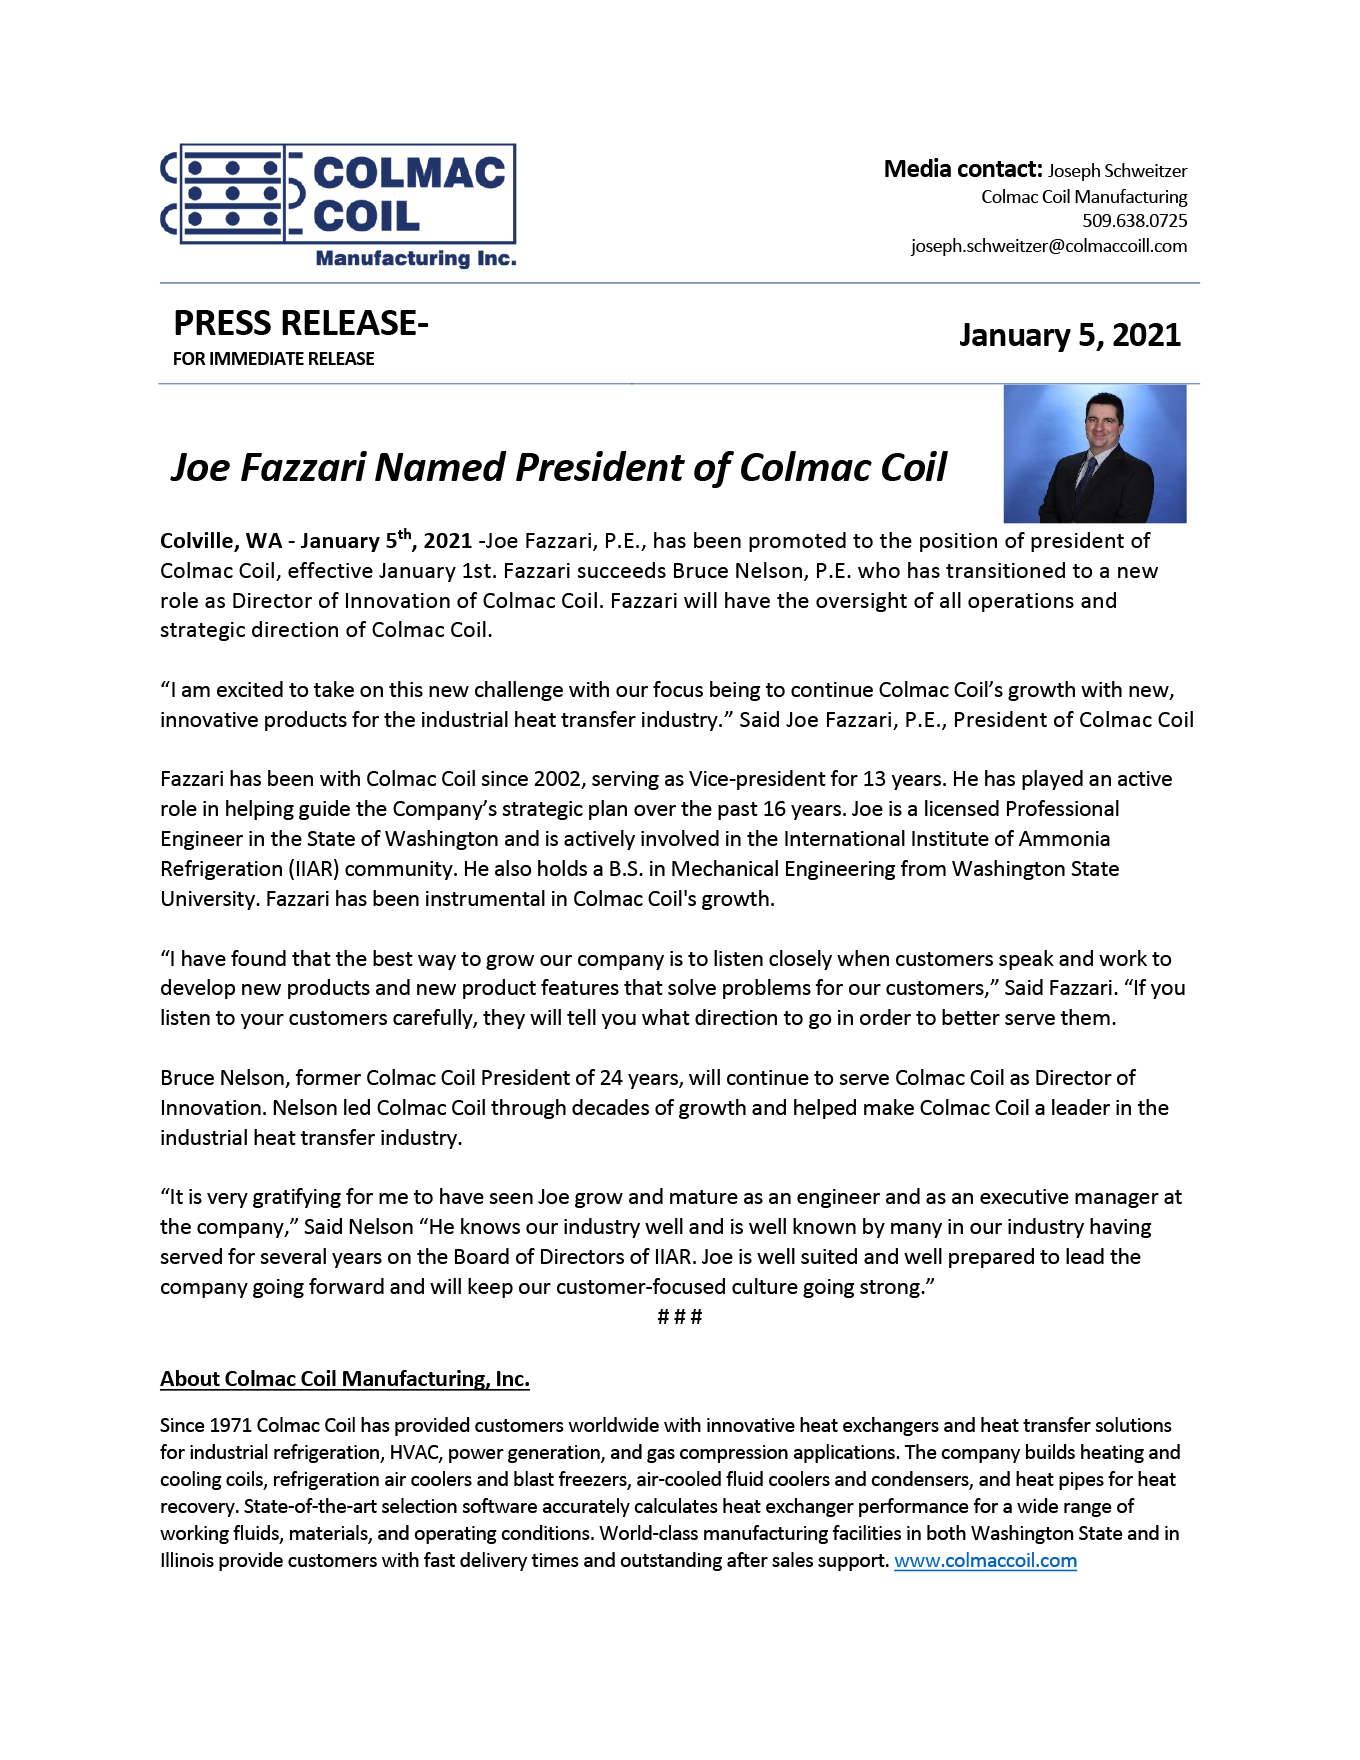 Joe Fazzari Named Colmac Coil President